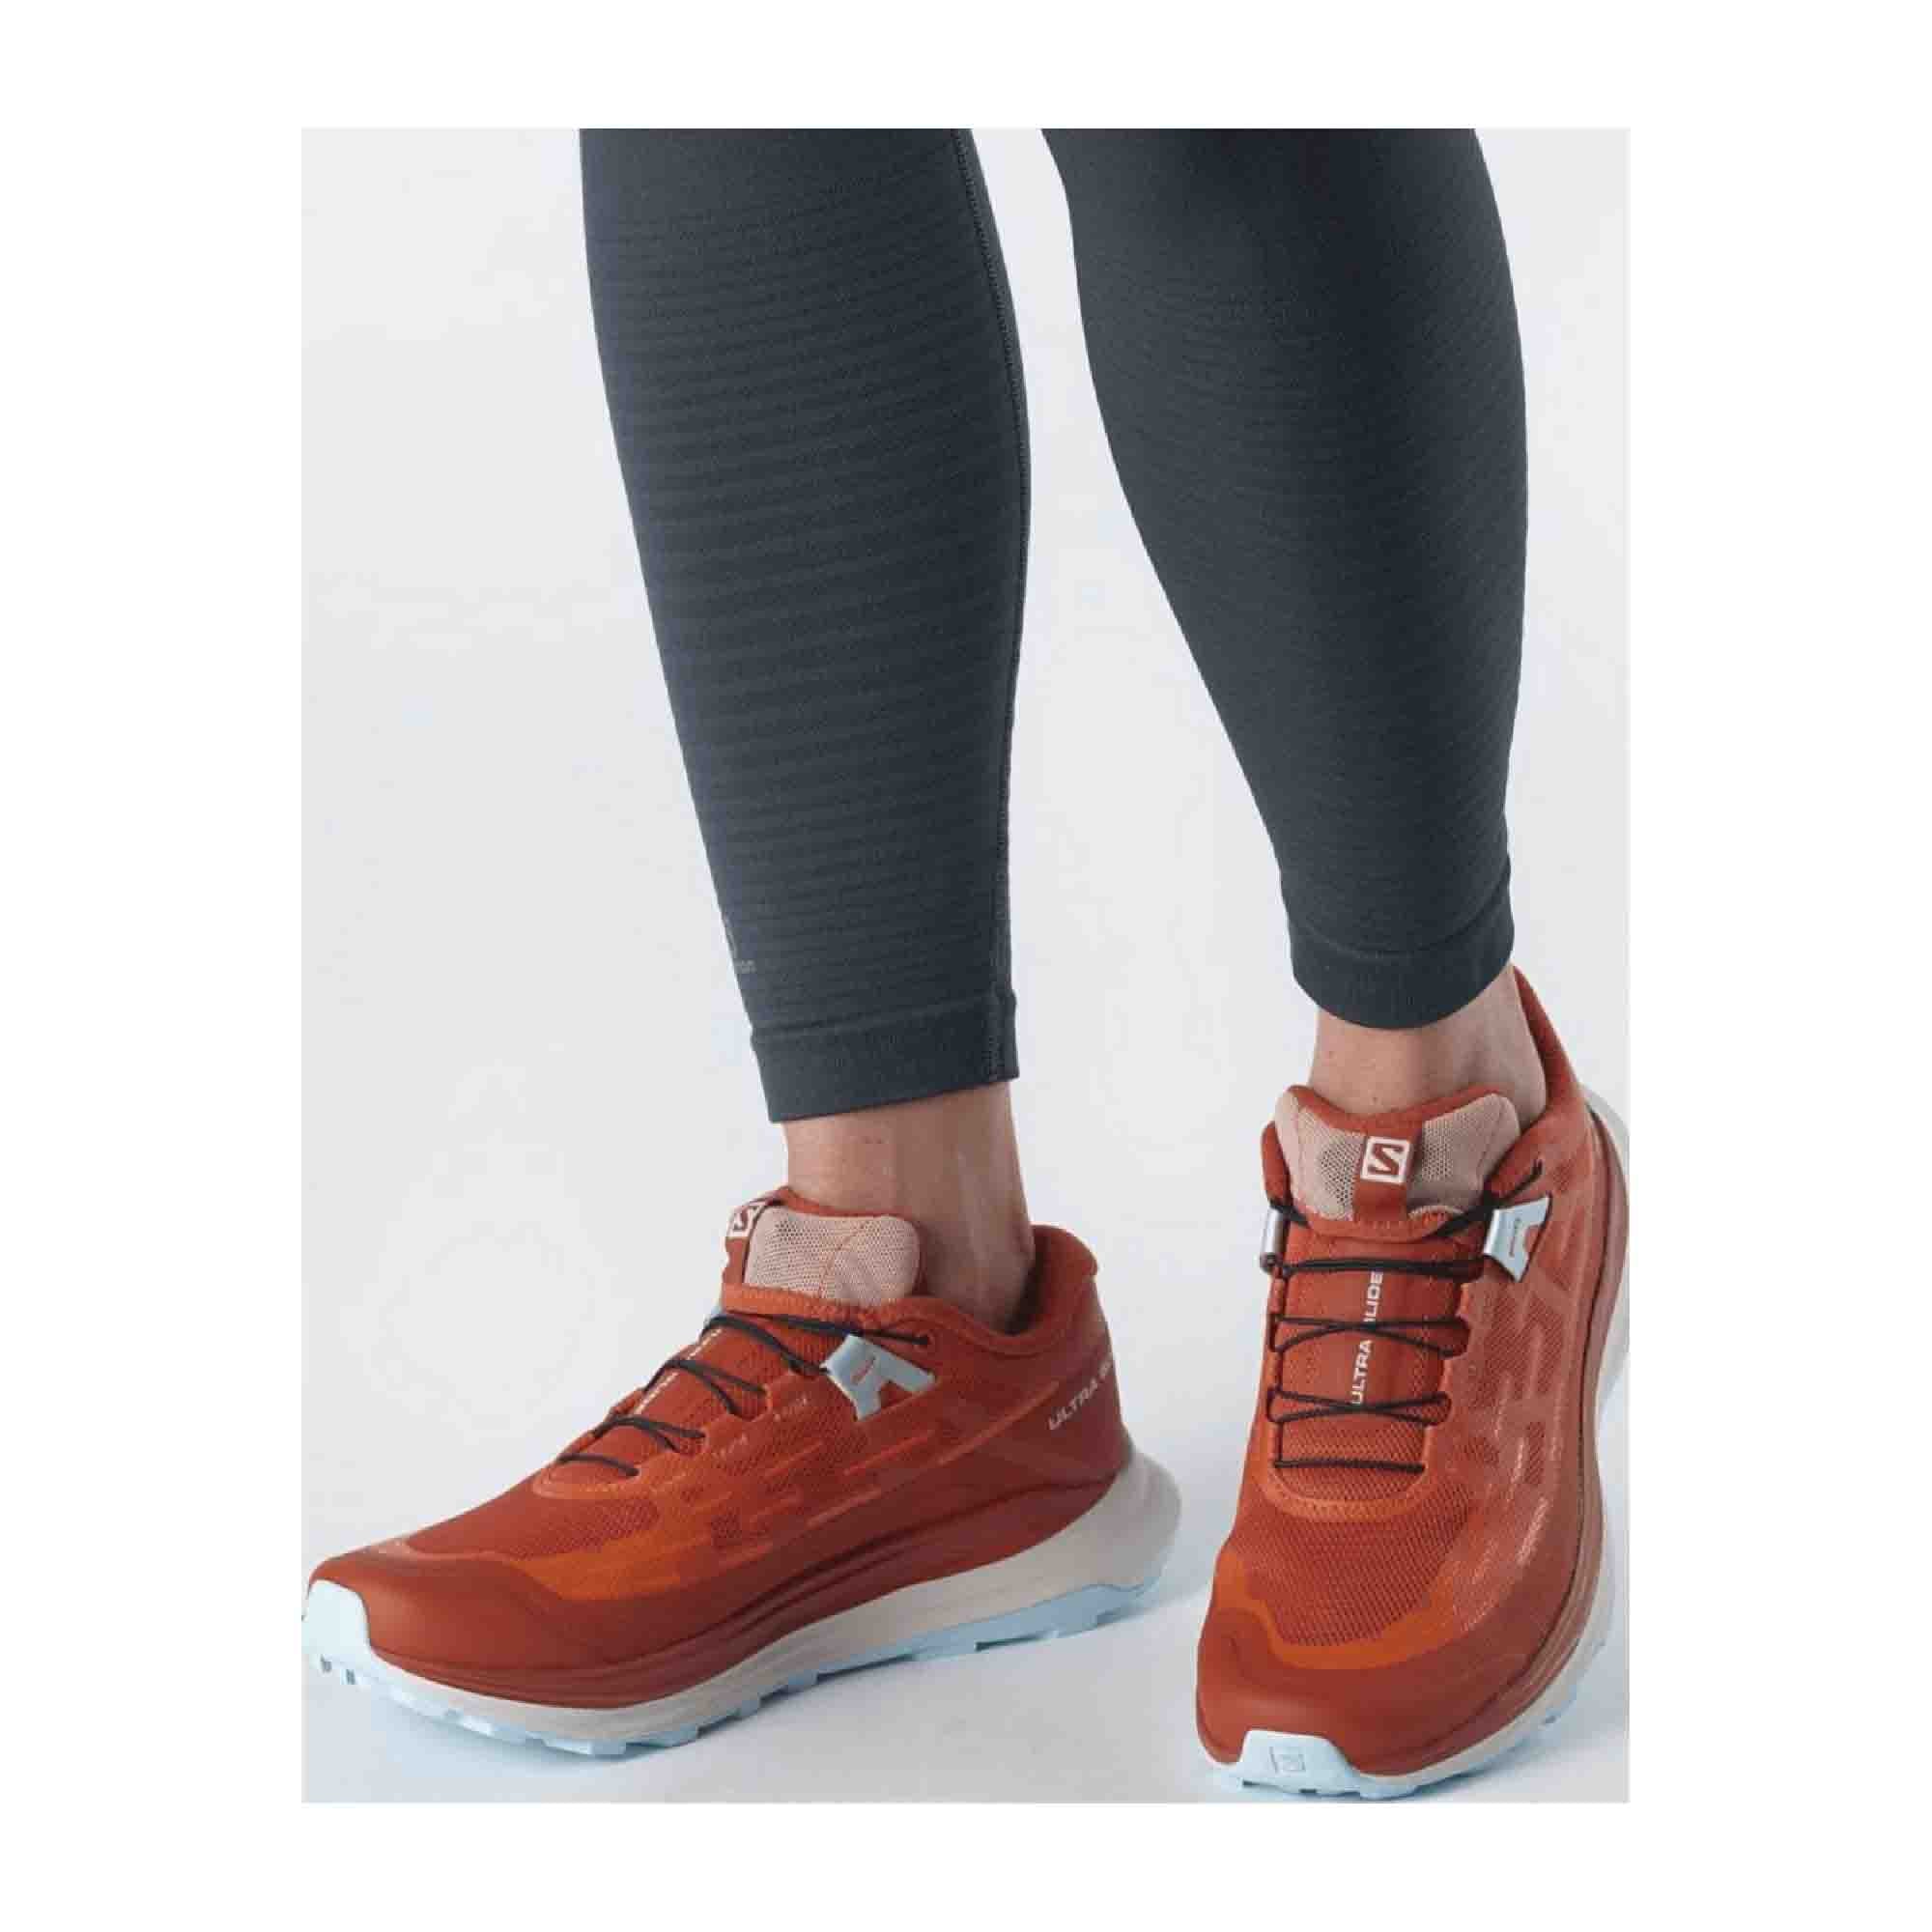 Salomon Ultra Glide for women, orange, shoes